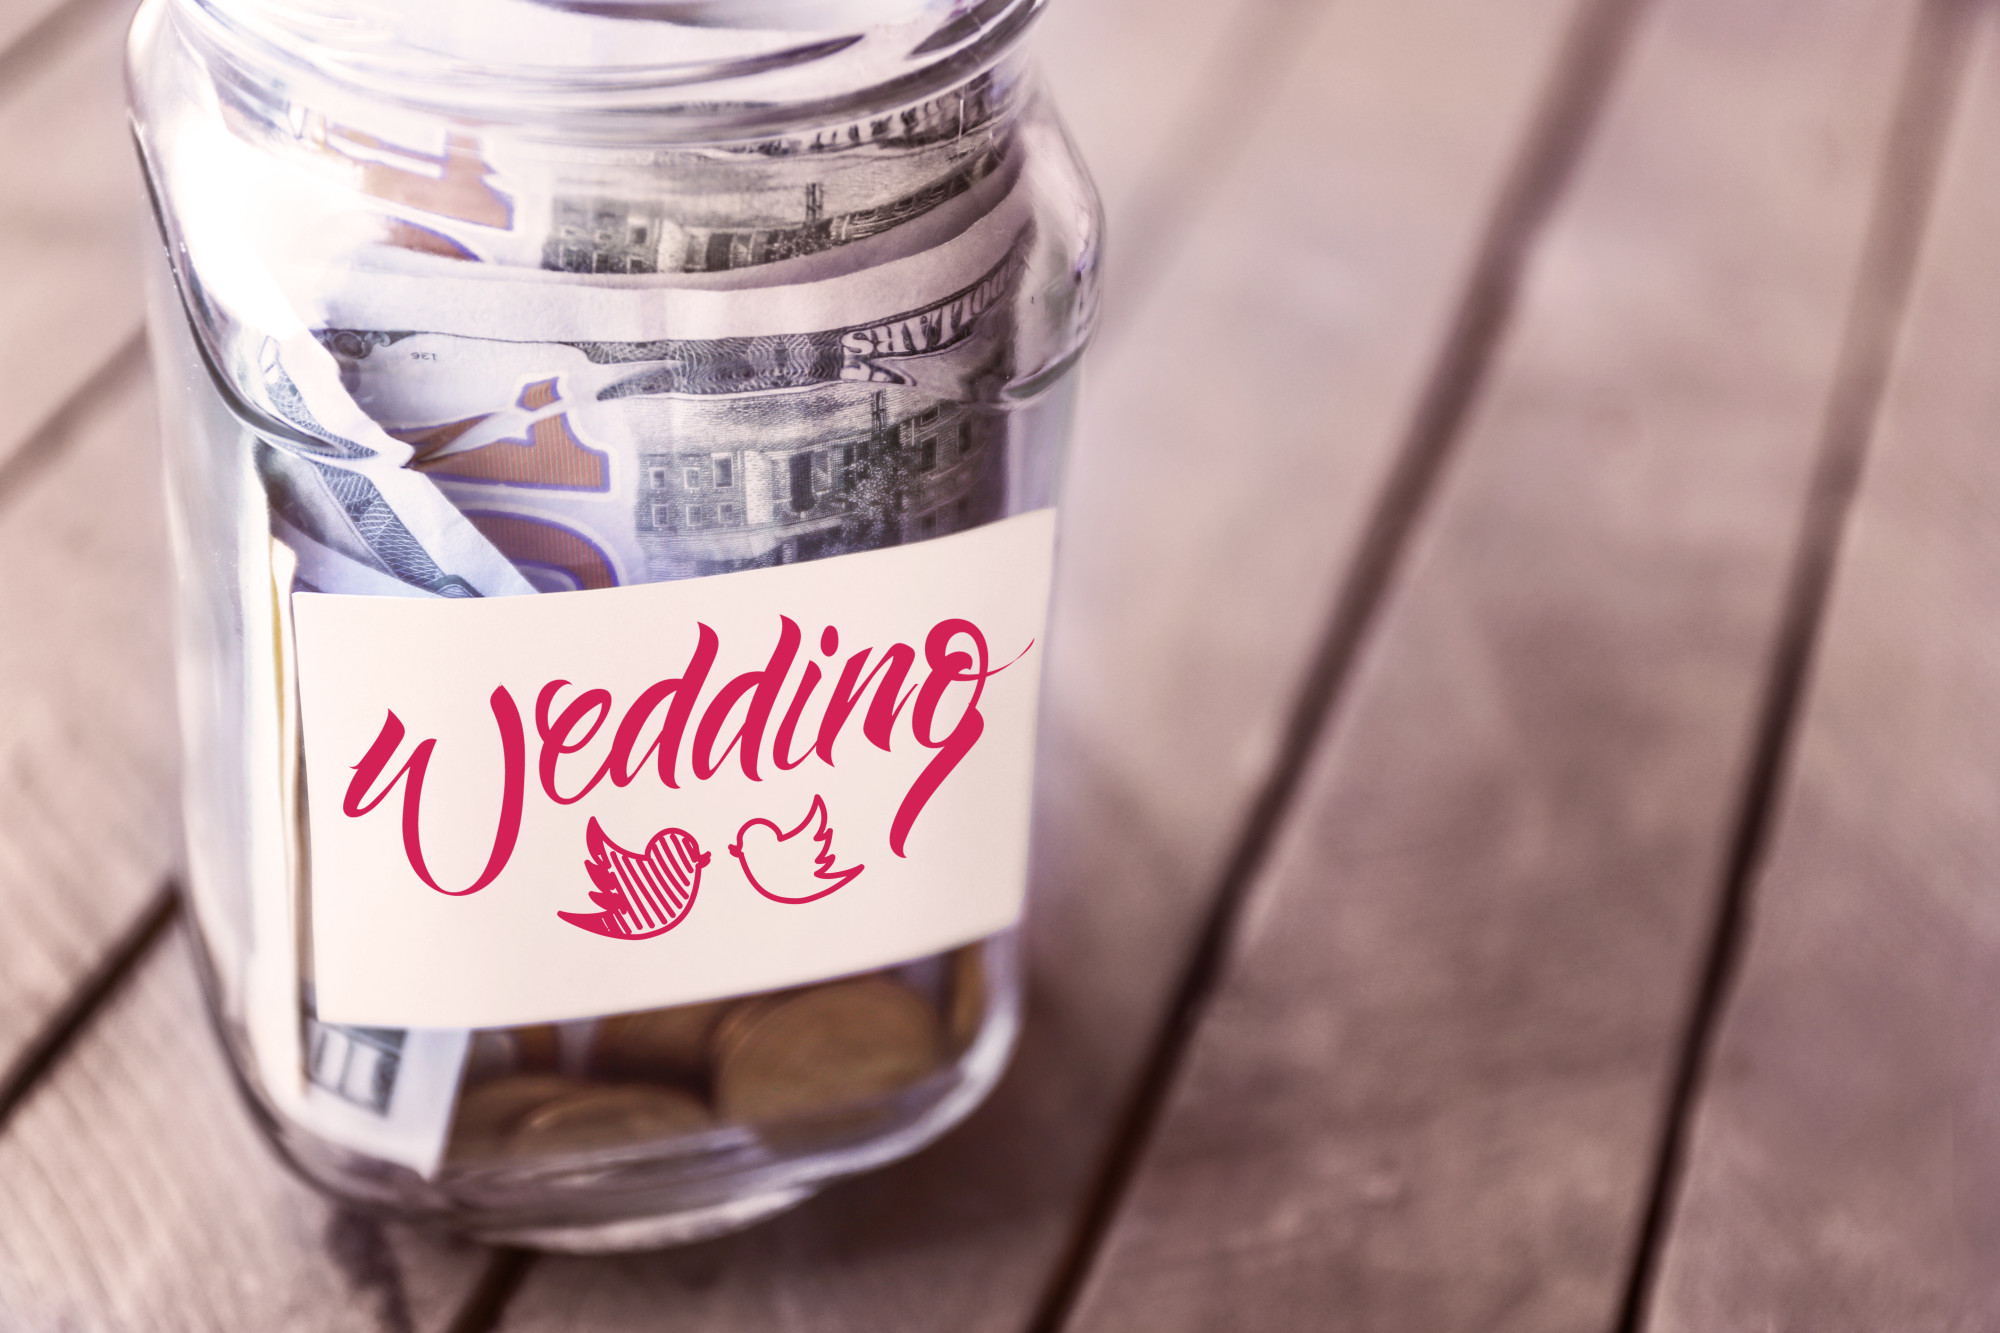 Budget Wedding Tips